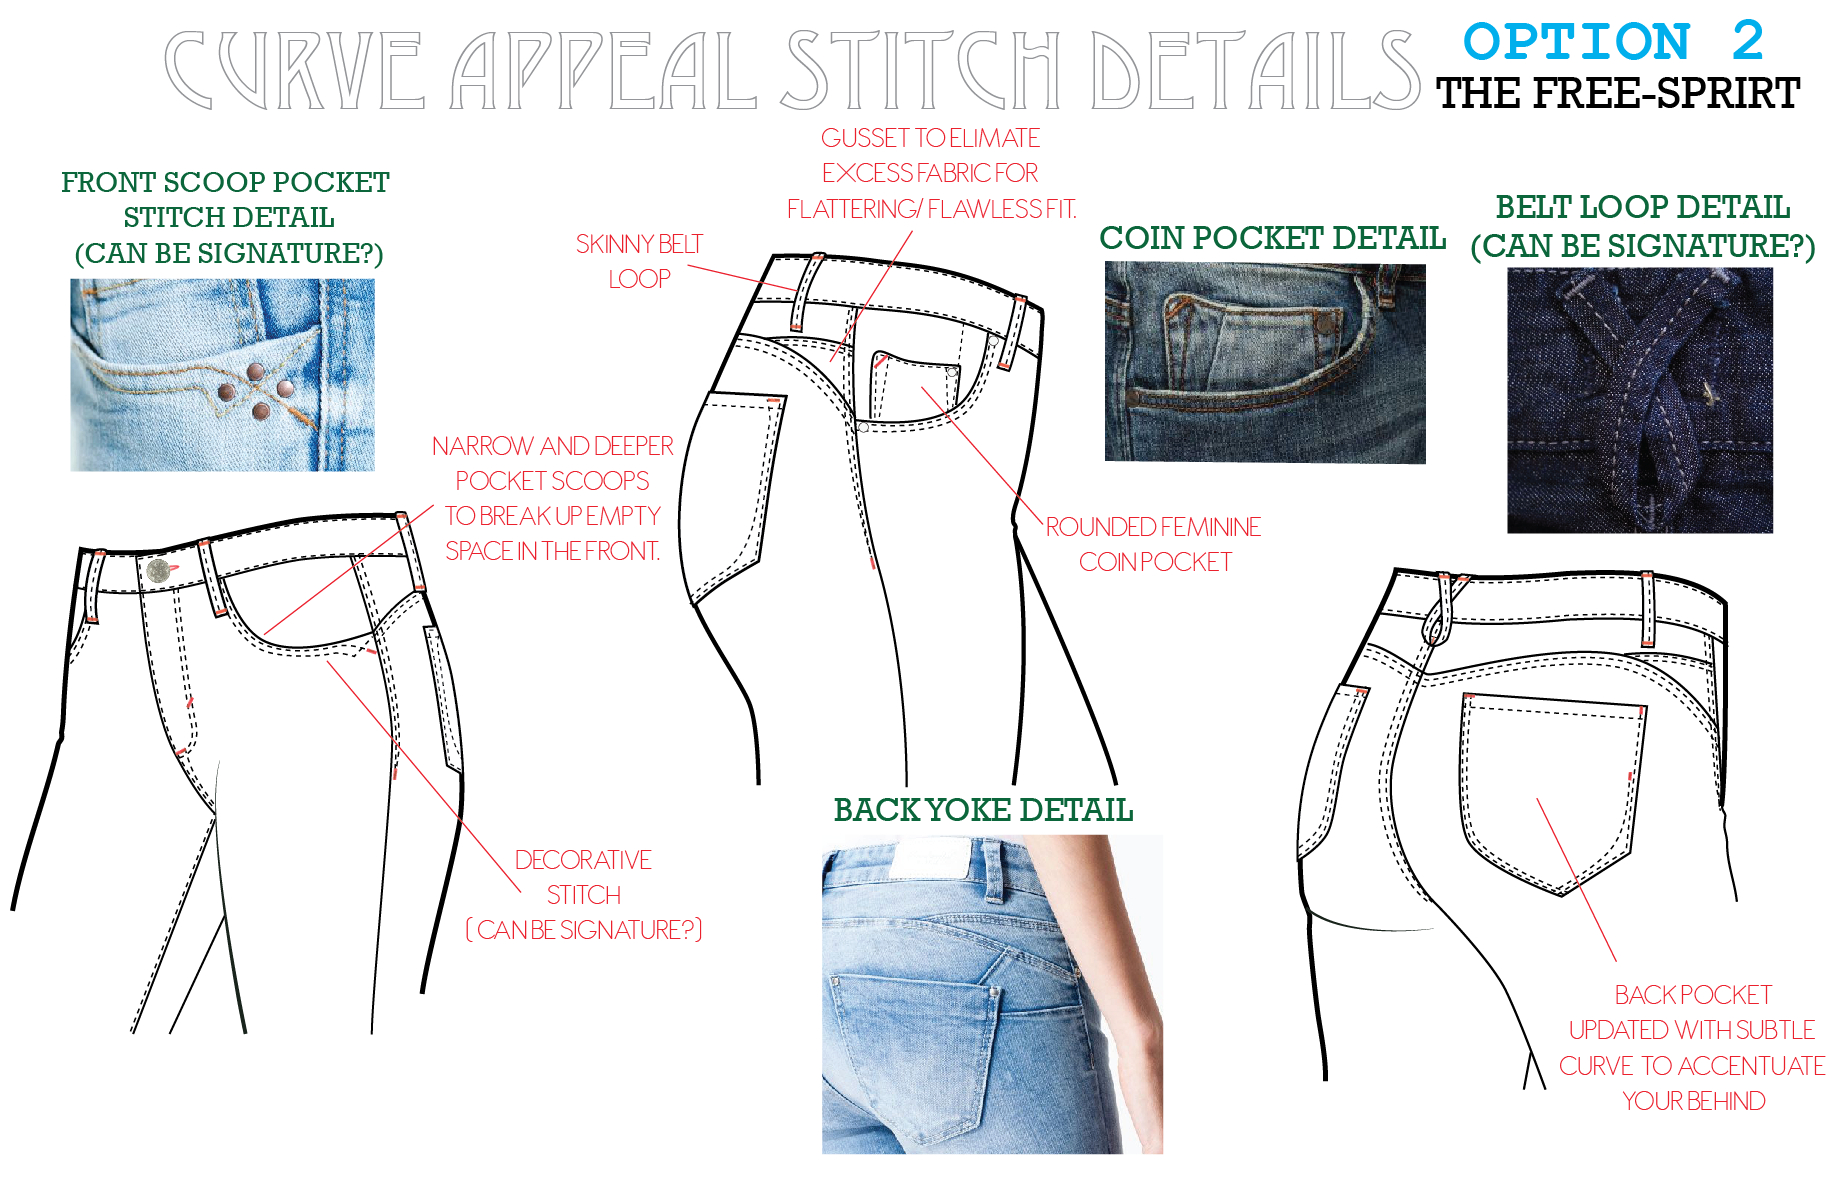 curve appeal jeans minimalist jeggings